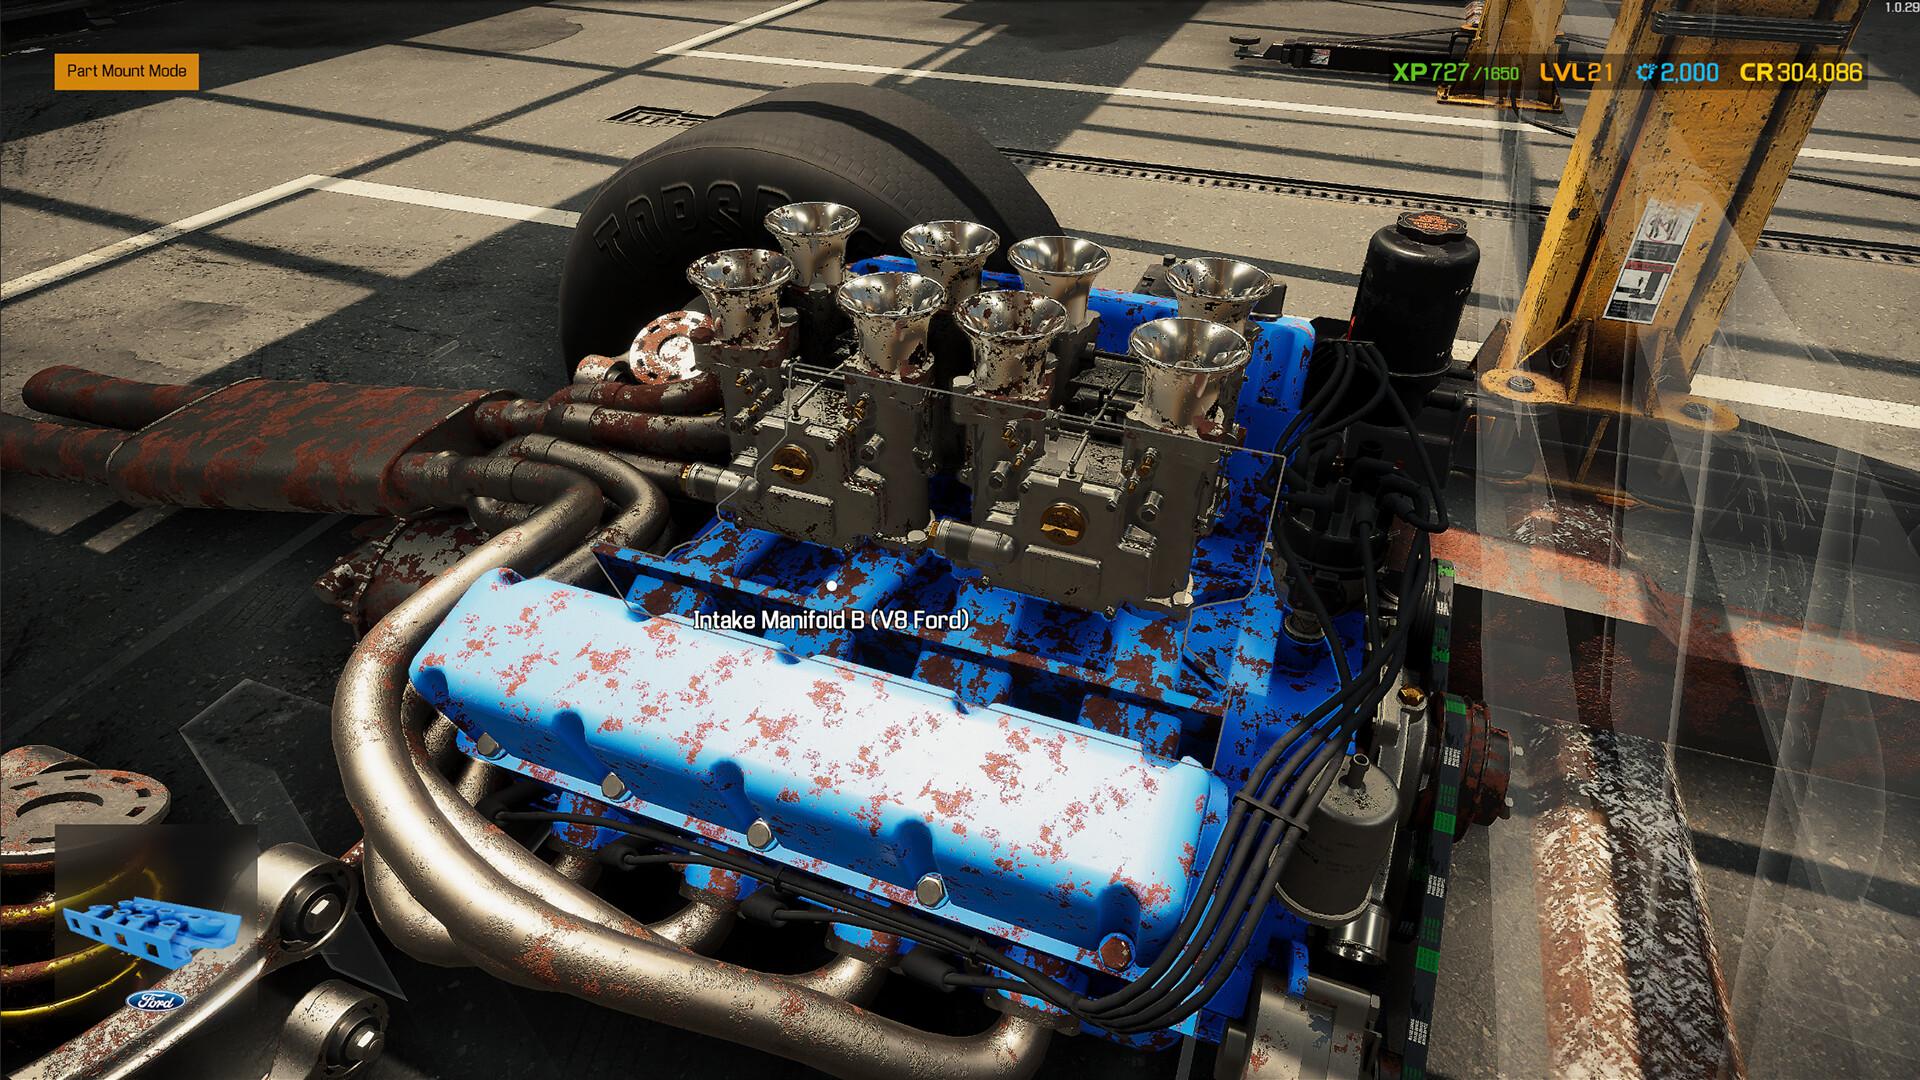 Car Mechanic Simulator 2021 - Ford Remastered DLC